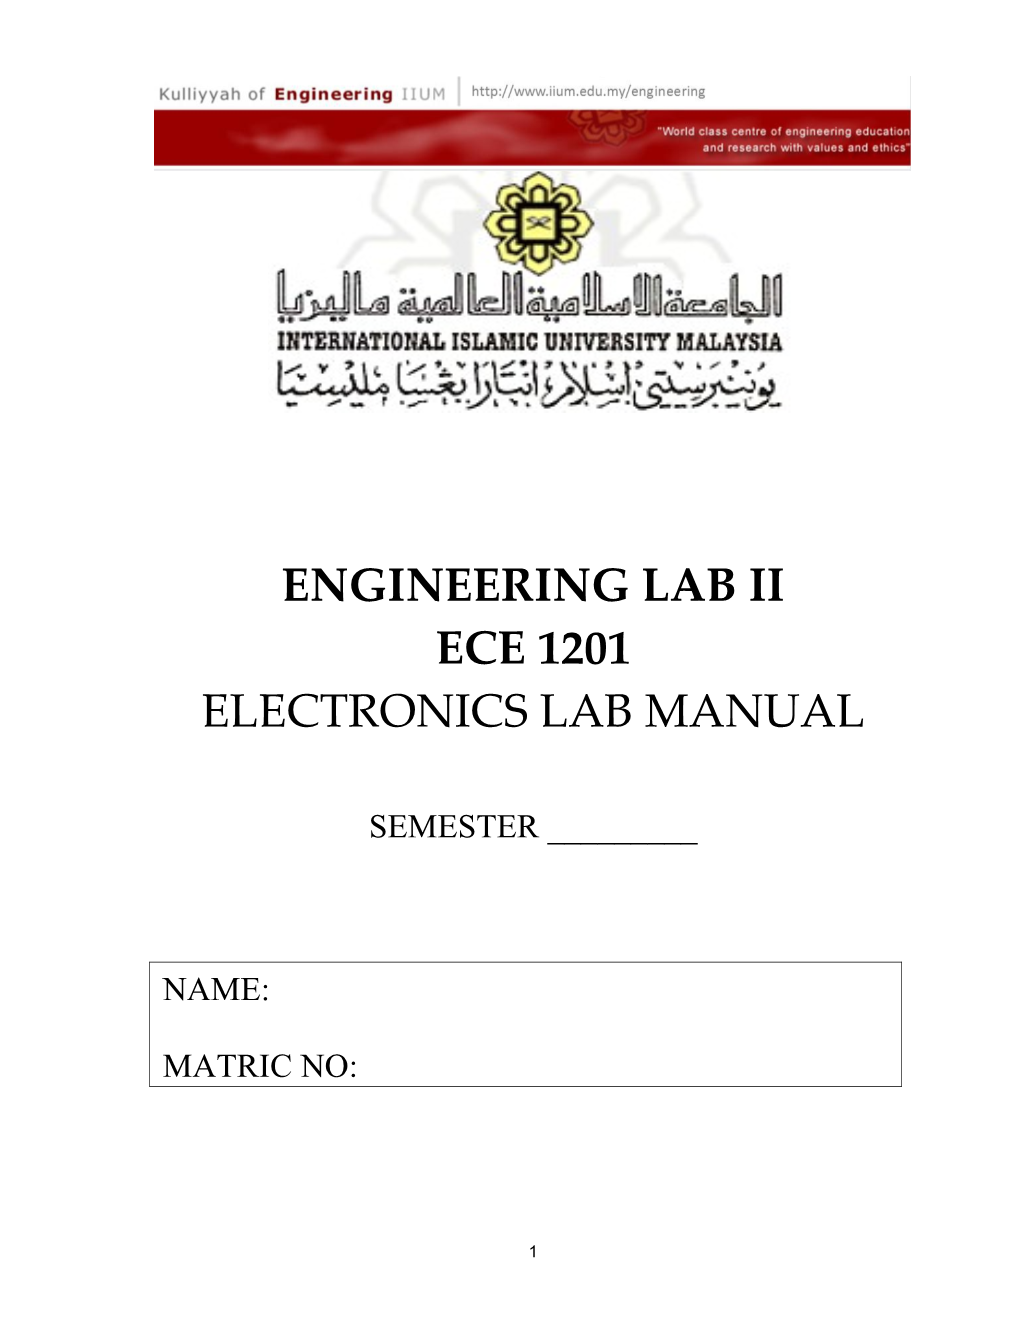 Engineering Lab Ii